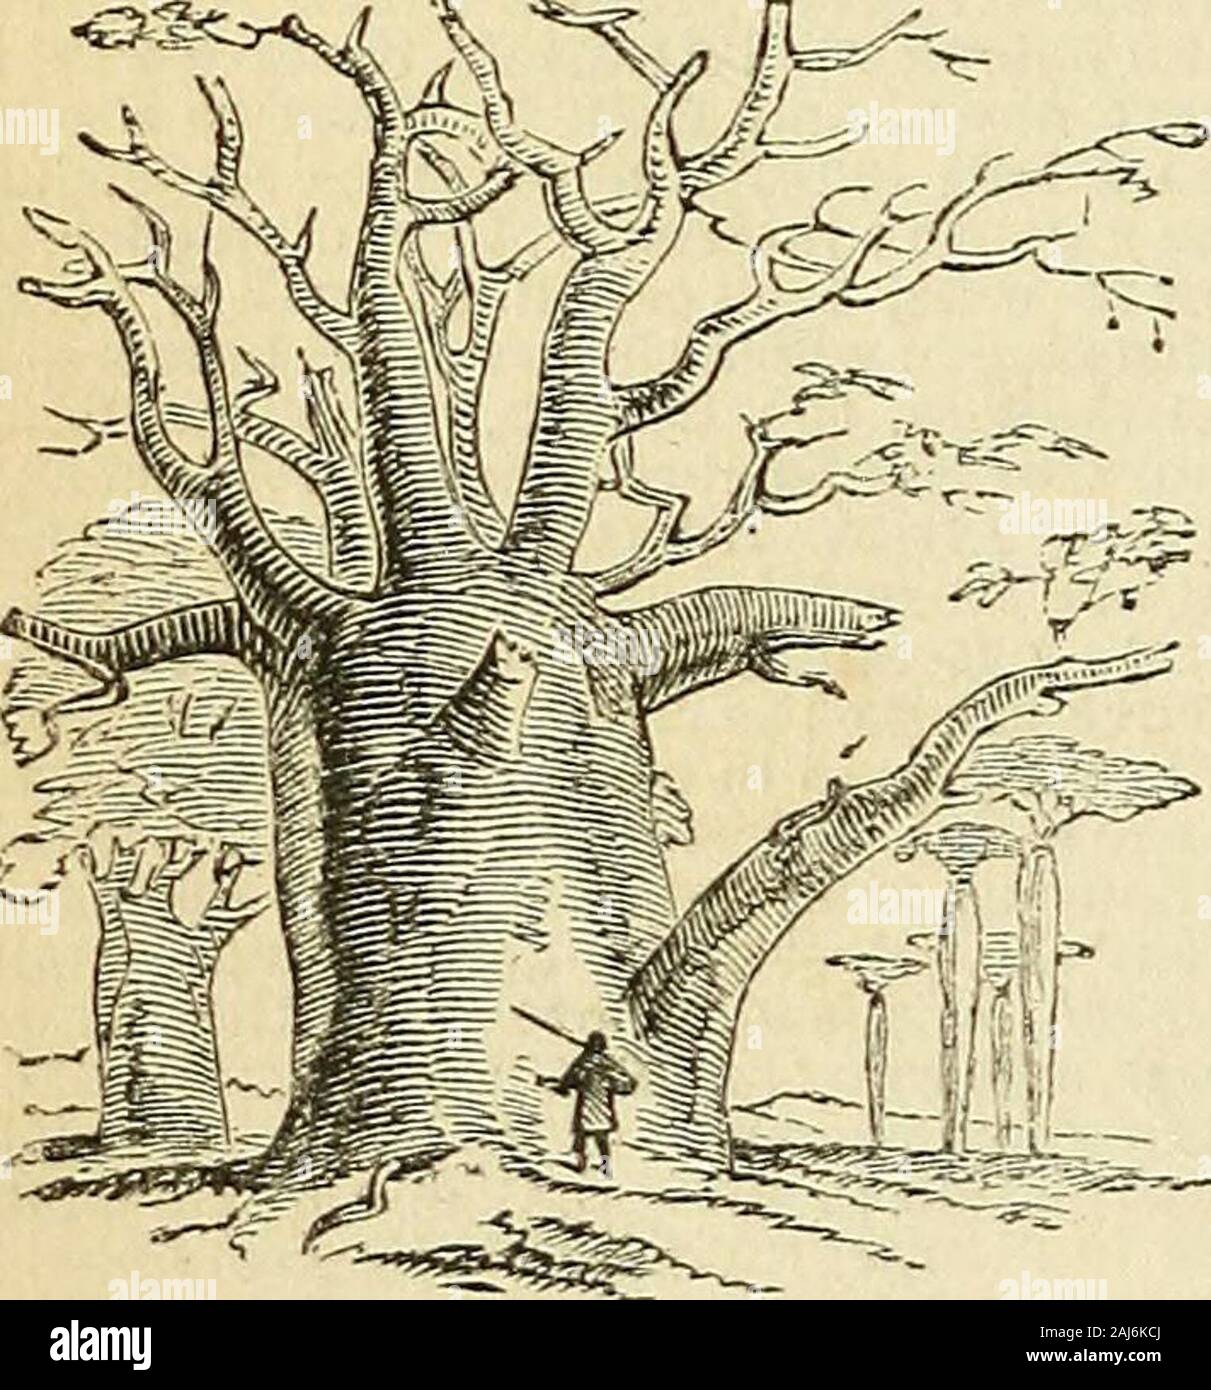 File:Baobab - Lalo.jpg - Wikimedia Commons